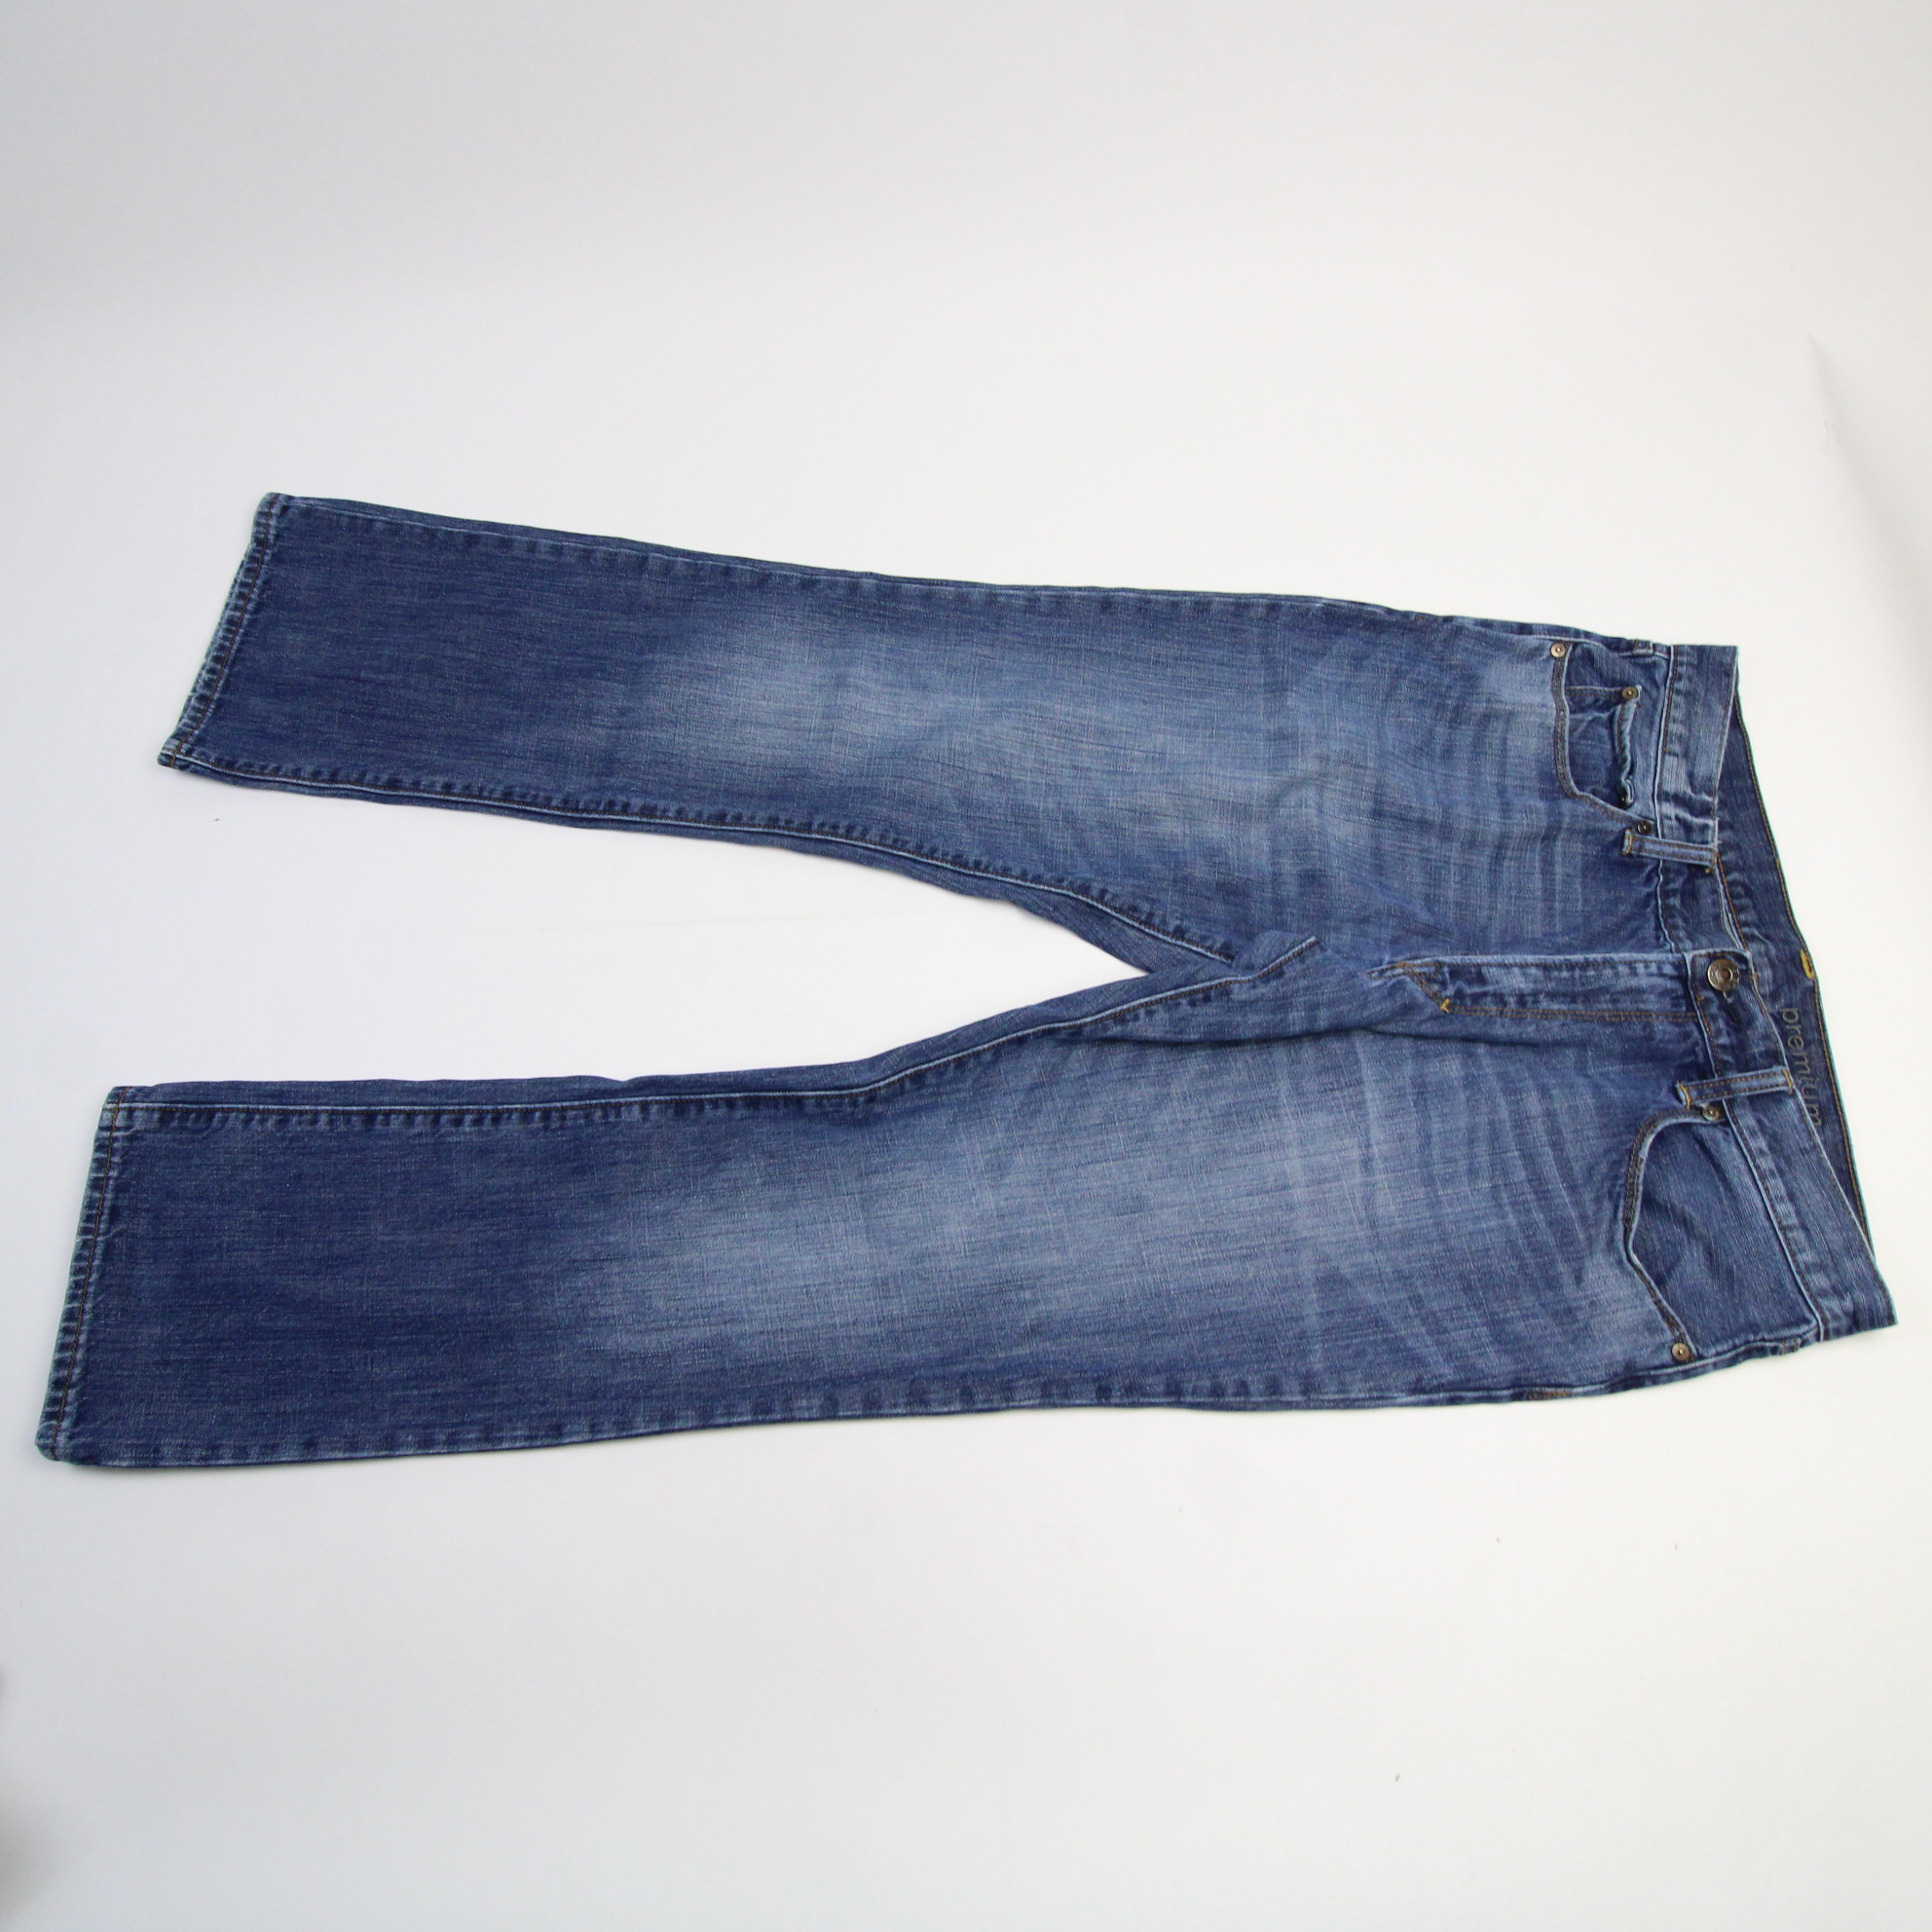 Gap Jeans Men's 33x32 Straight Blue Denim Used | eBay